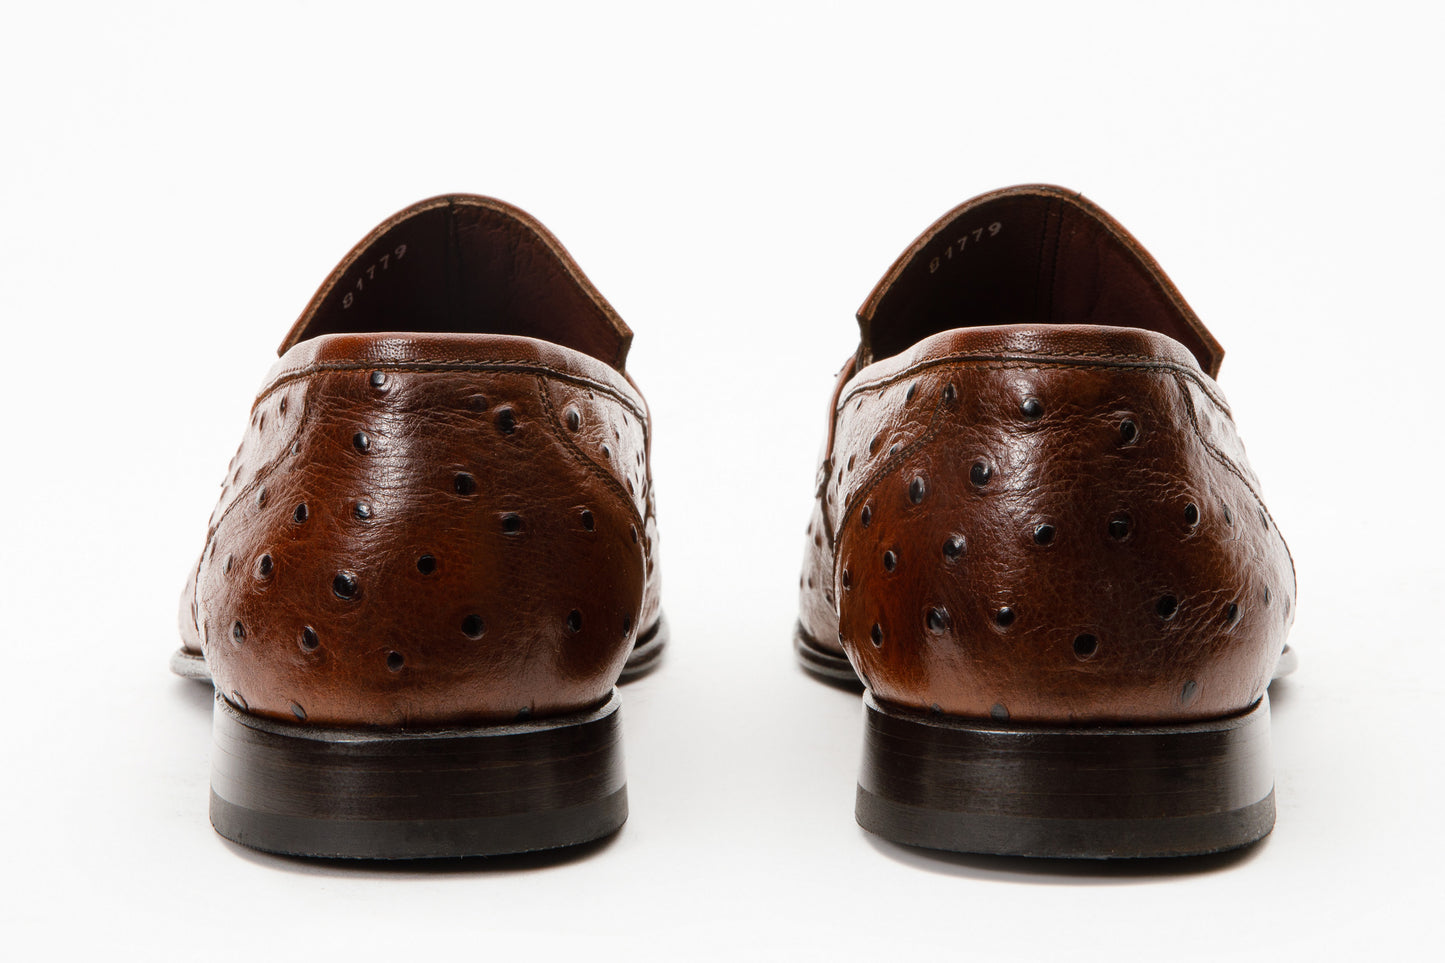 The Johannesburg Brown Leather Dress Loafer Men  Shoe